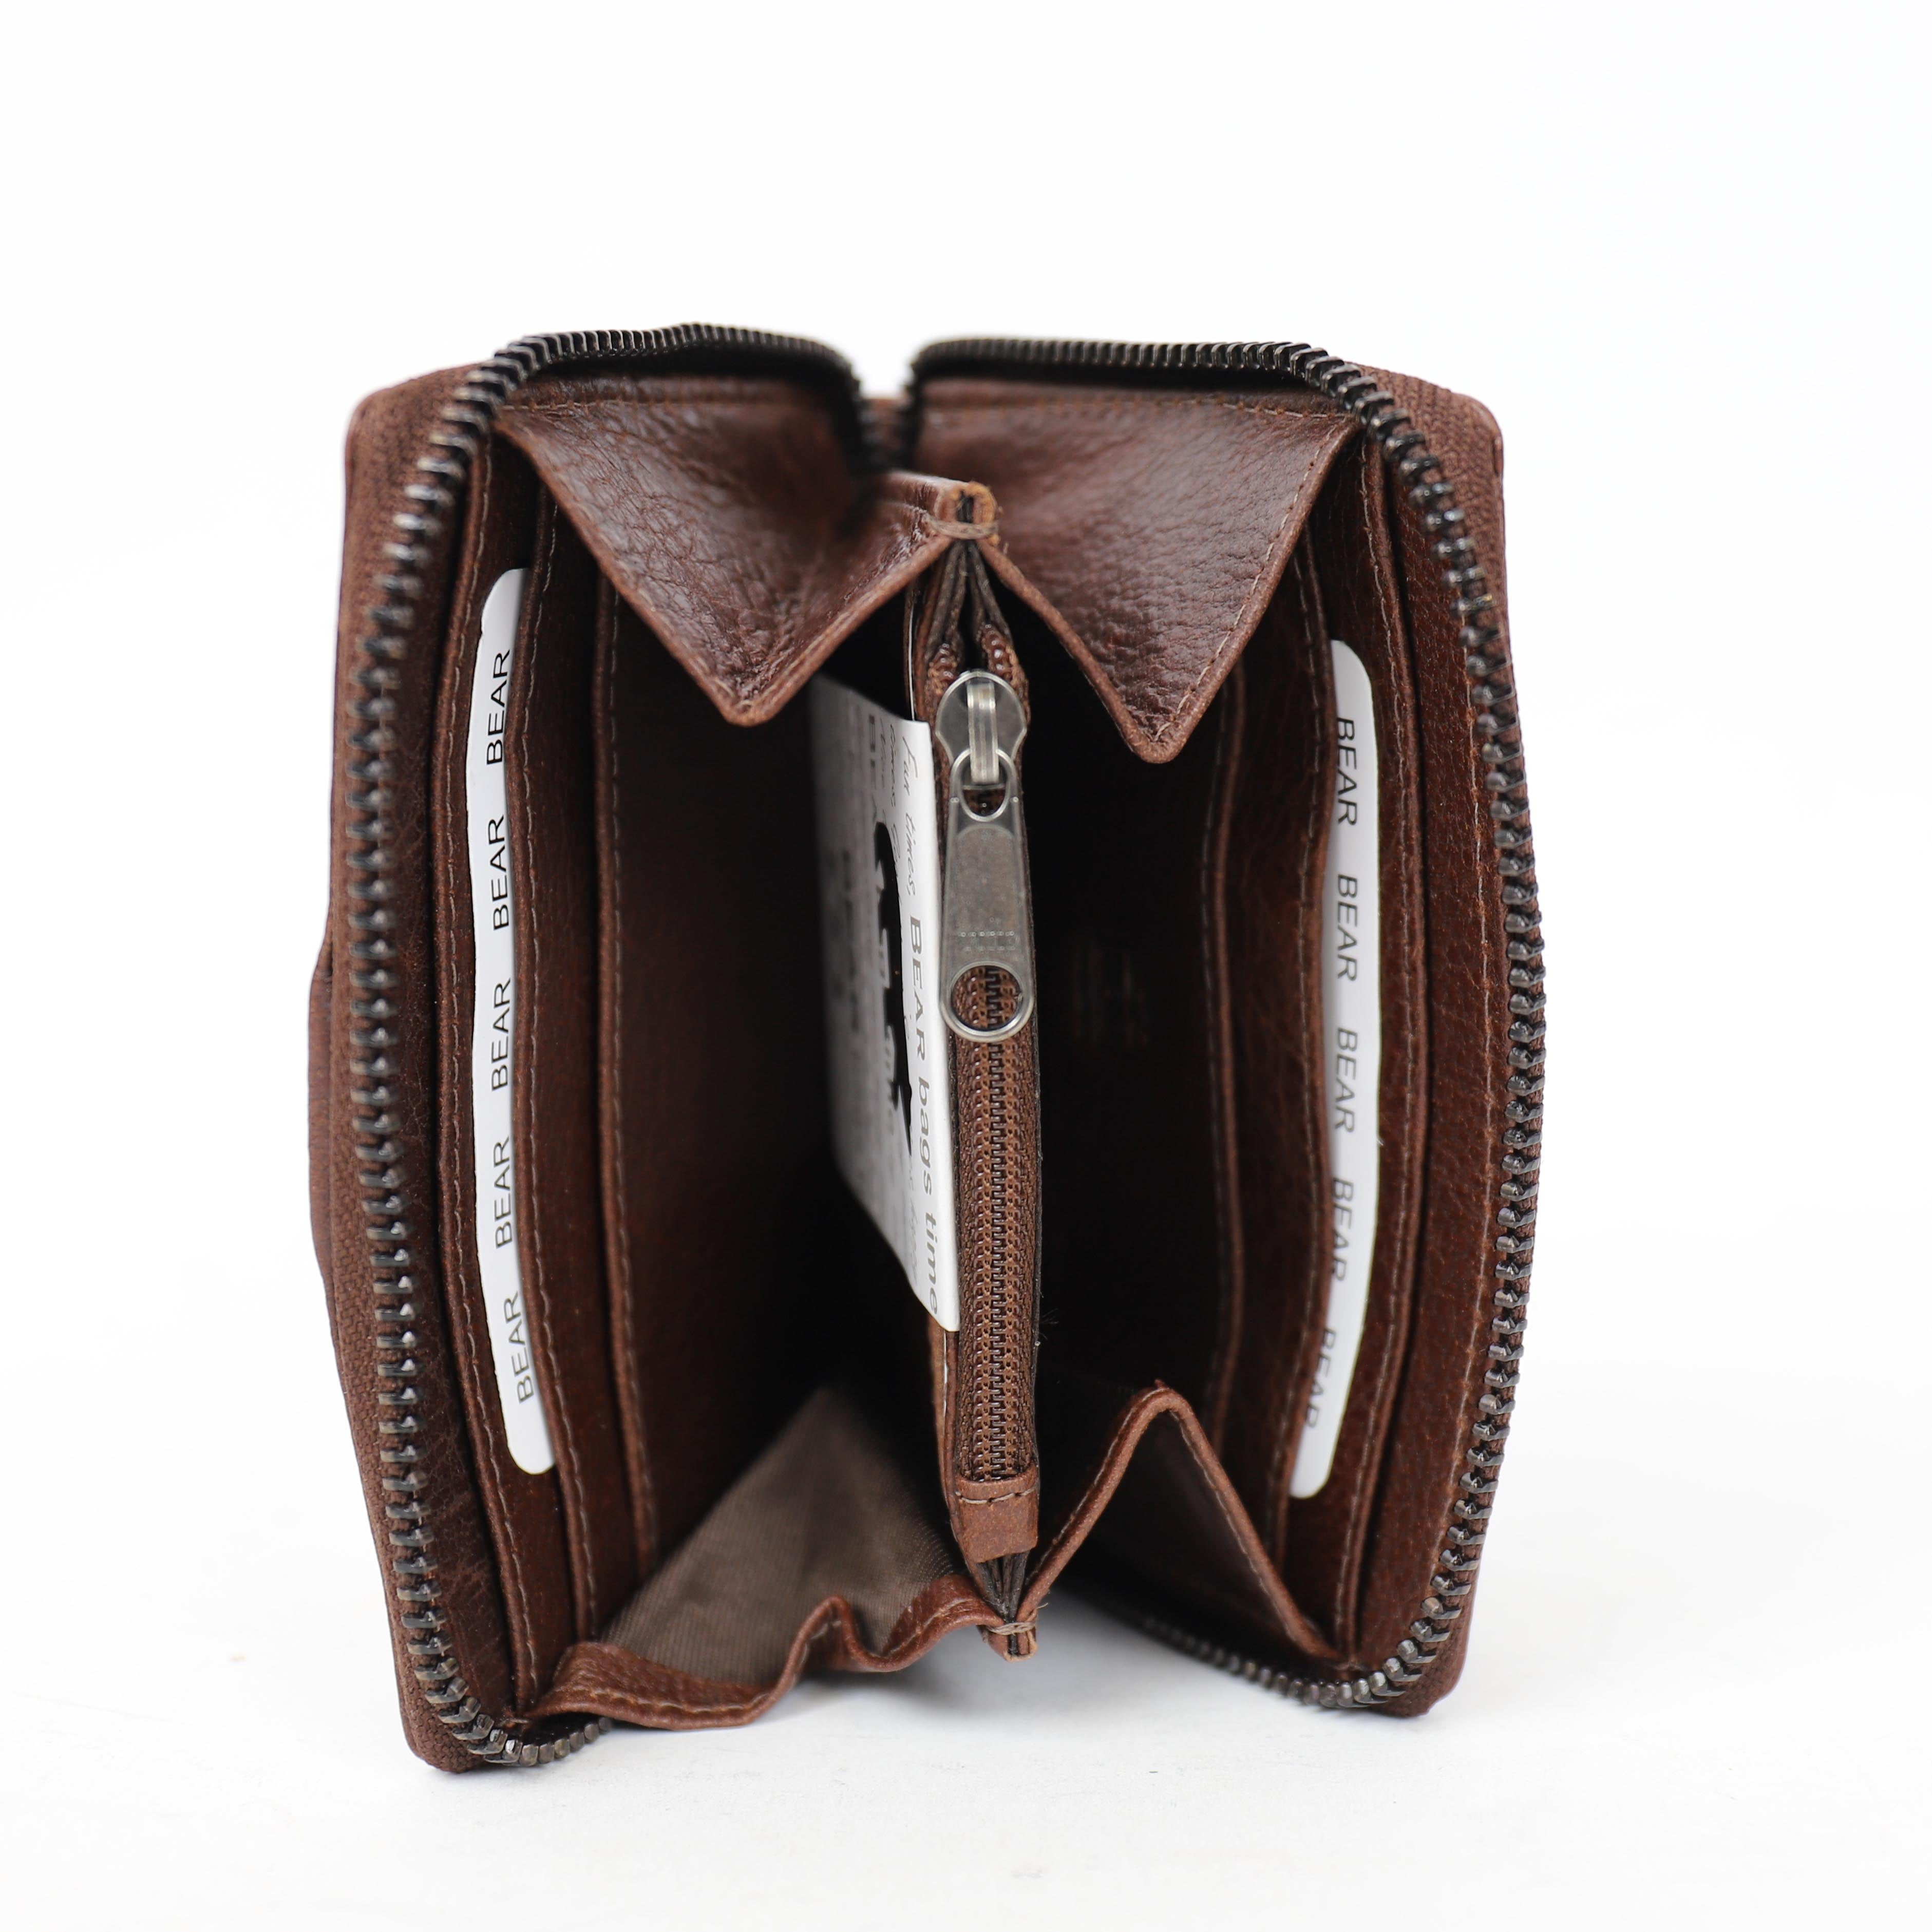 Zip wallet 'Yanet' brown/stripe